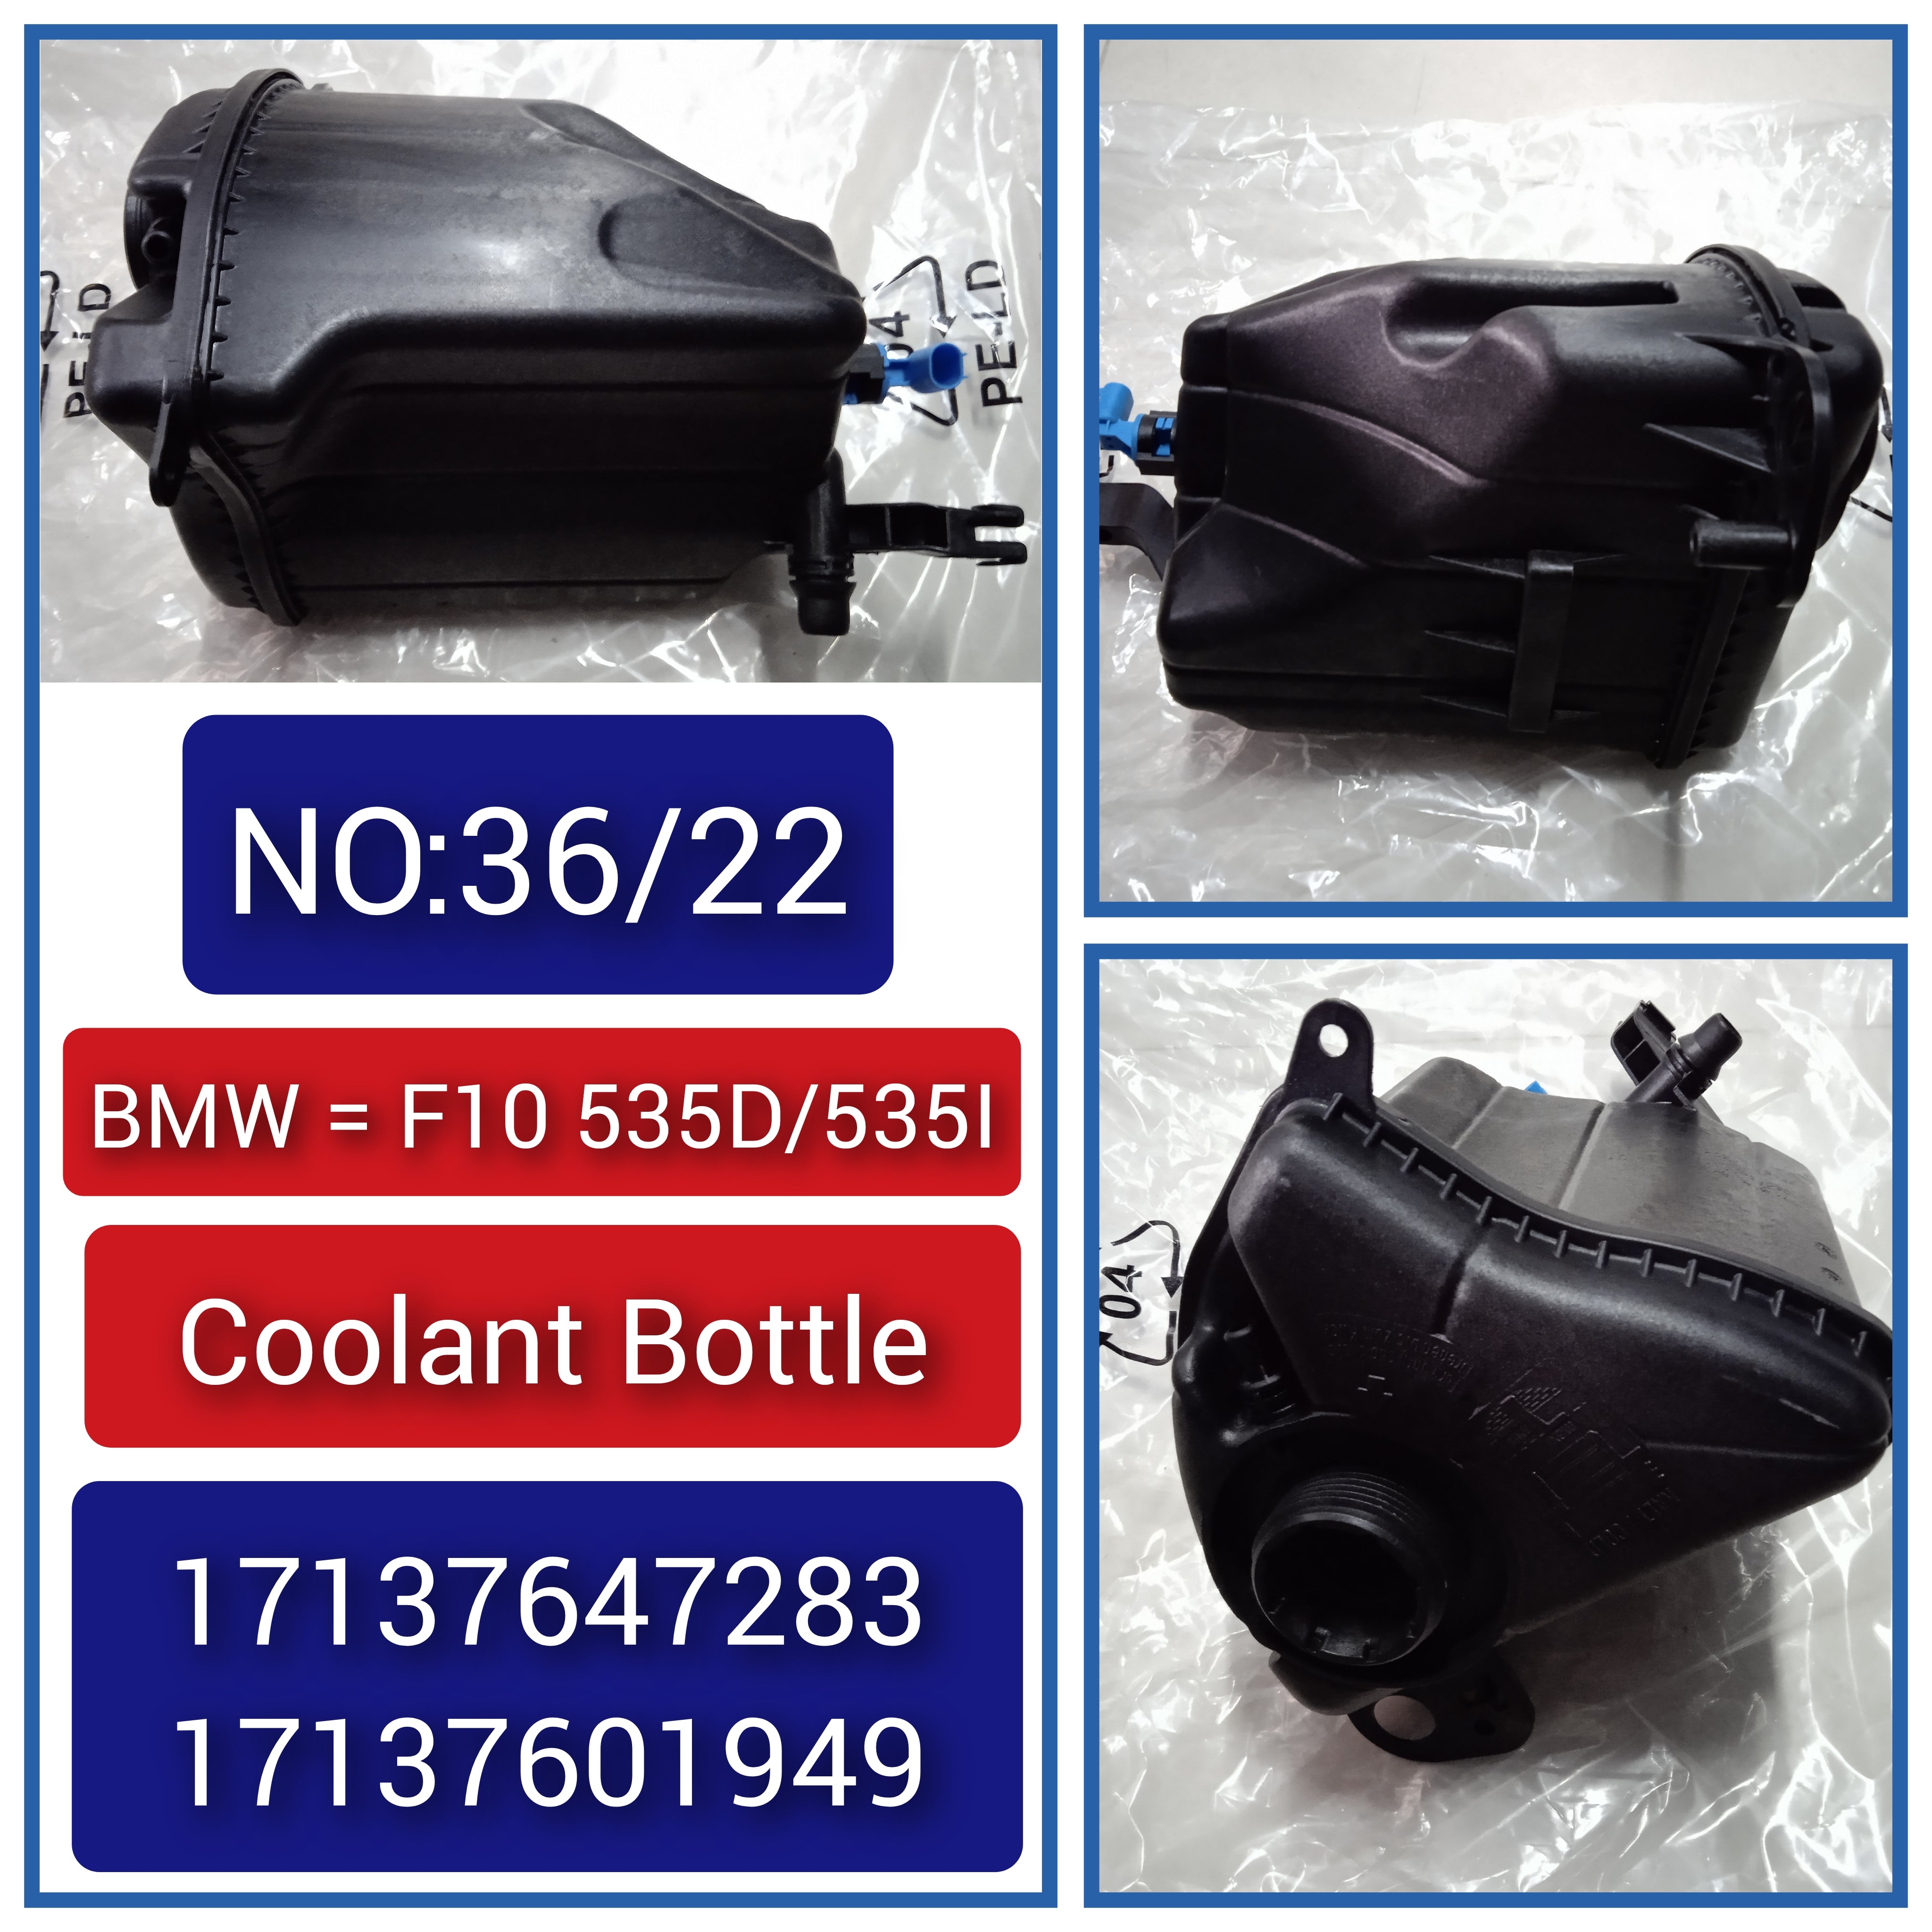 Coolant Bottle 17137601949 For BMW 5 Series F10 7 Series F01 F02 F03 Tag-B-36